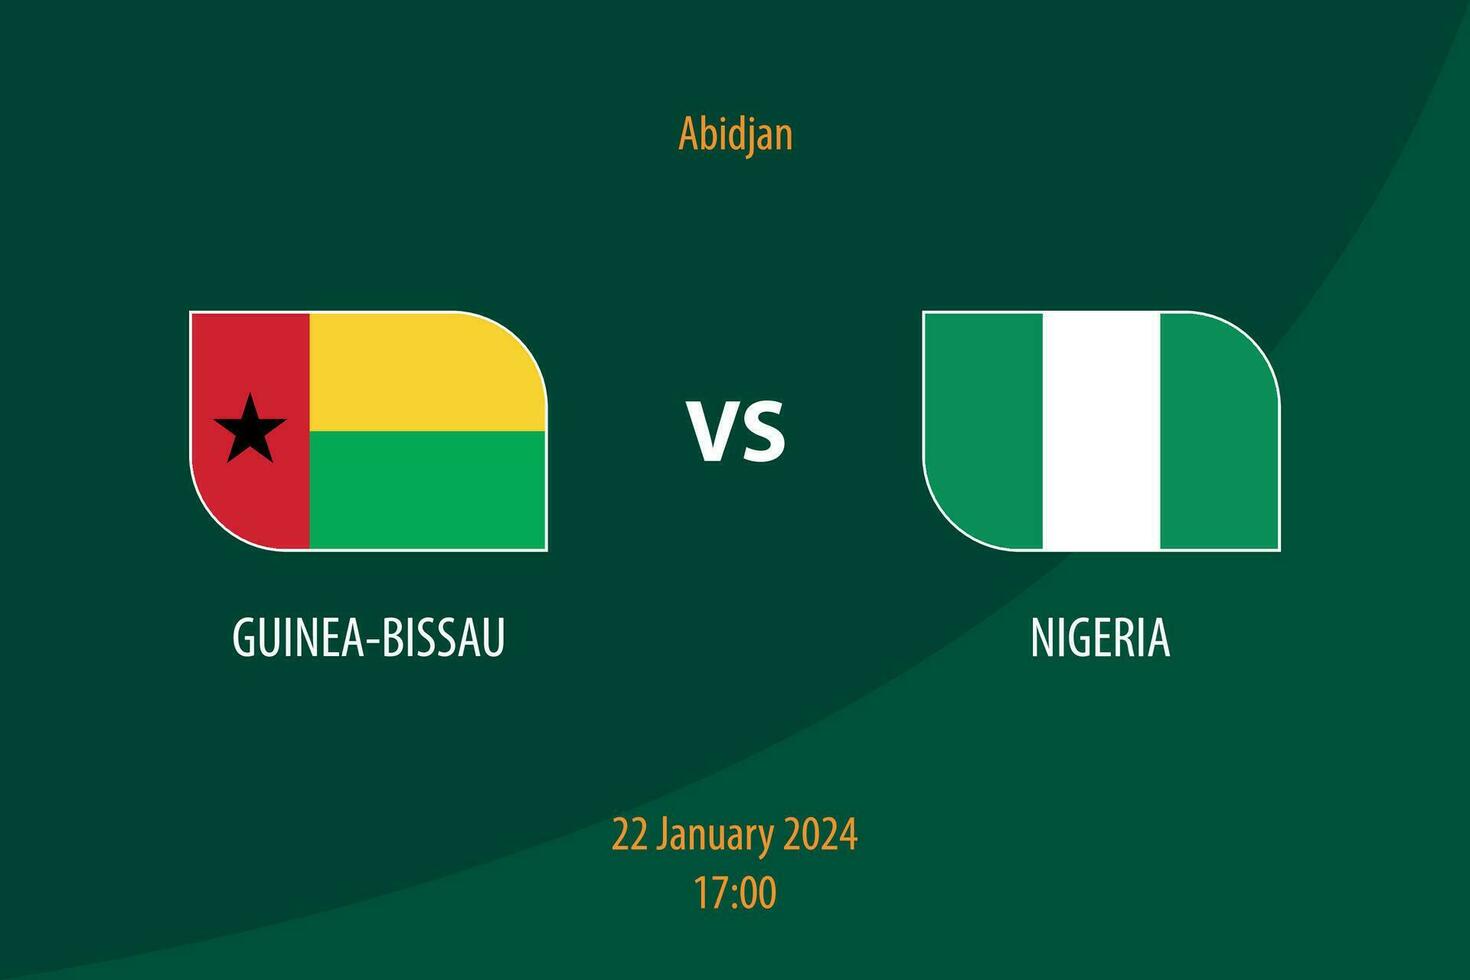 Guinea-Bissau vs Nigeria football scoreboard broadcast template vector